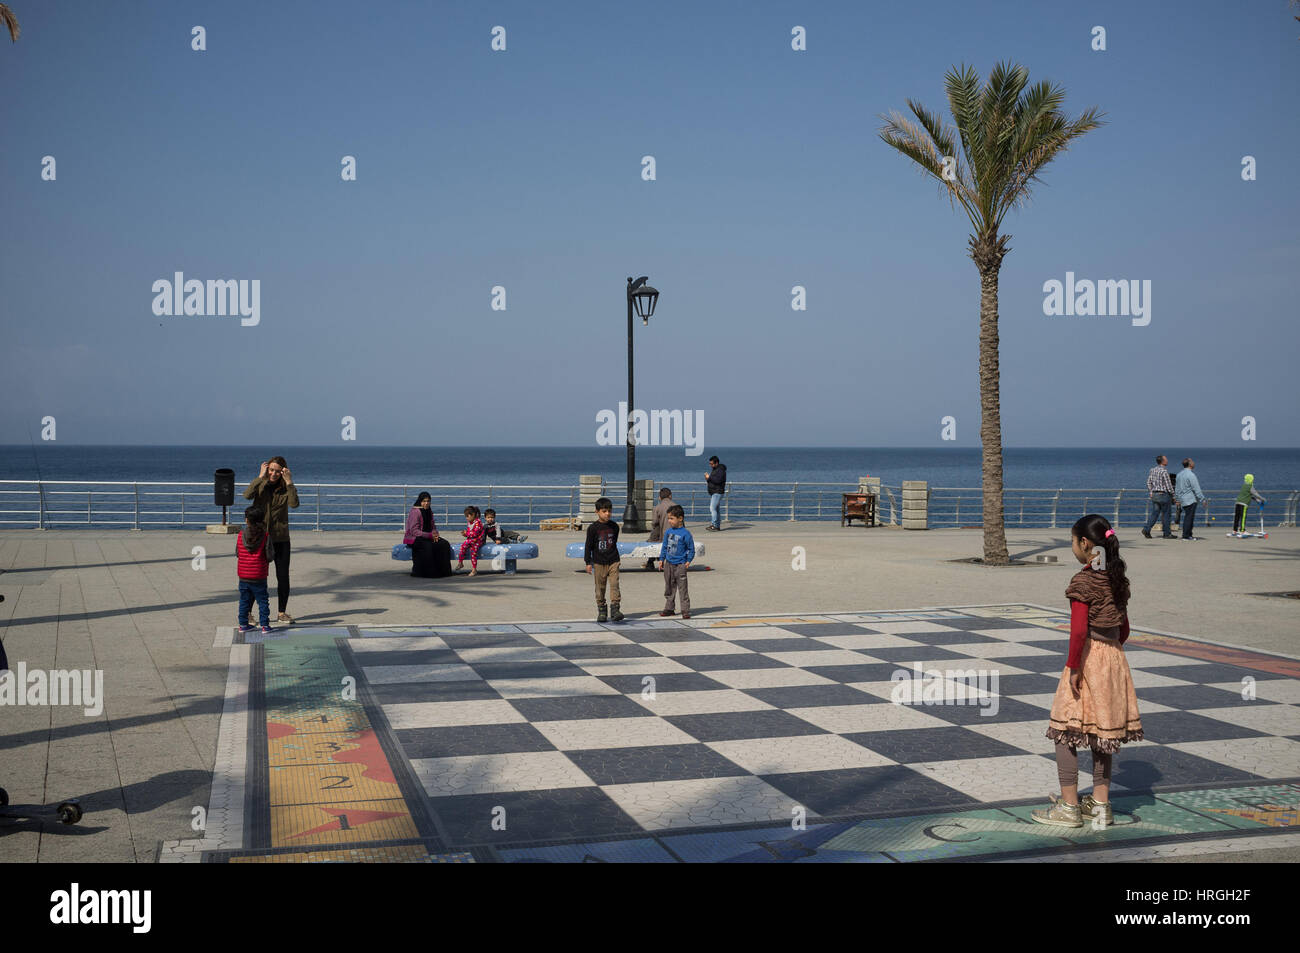 Tablero de ajedrez de beirut fotografías e imágenes de alta resolución -  Alamy